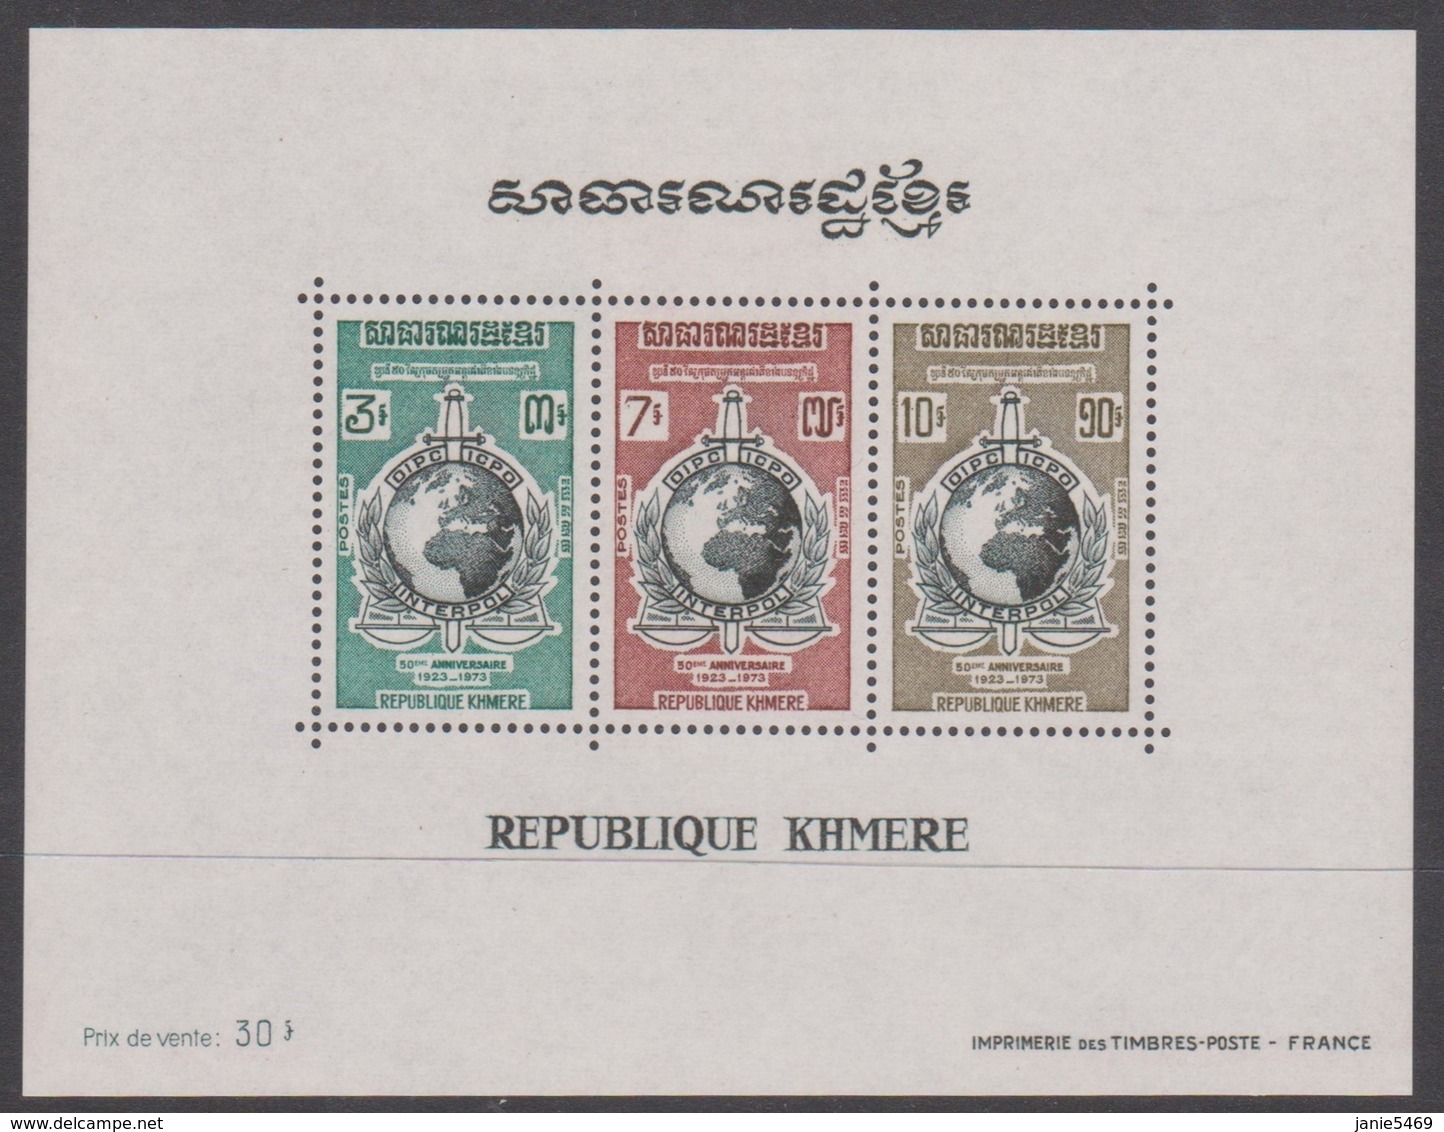 Cambodia Scott 317a 1973 50th Anniversary Of Interpol Souvenir Sheet, Mint Never Hinged - Cambodia